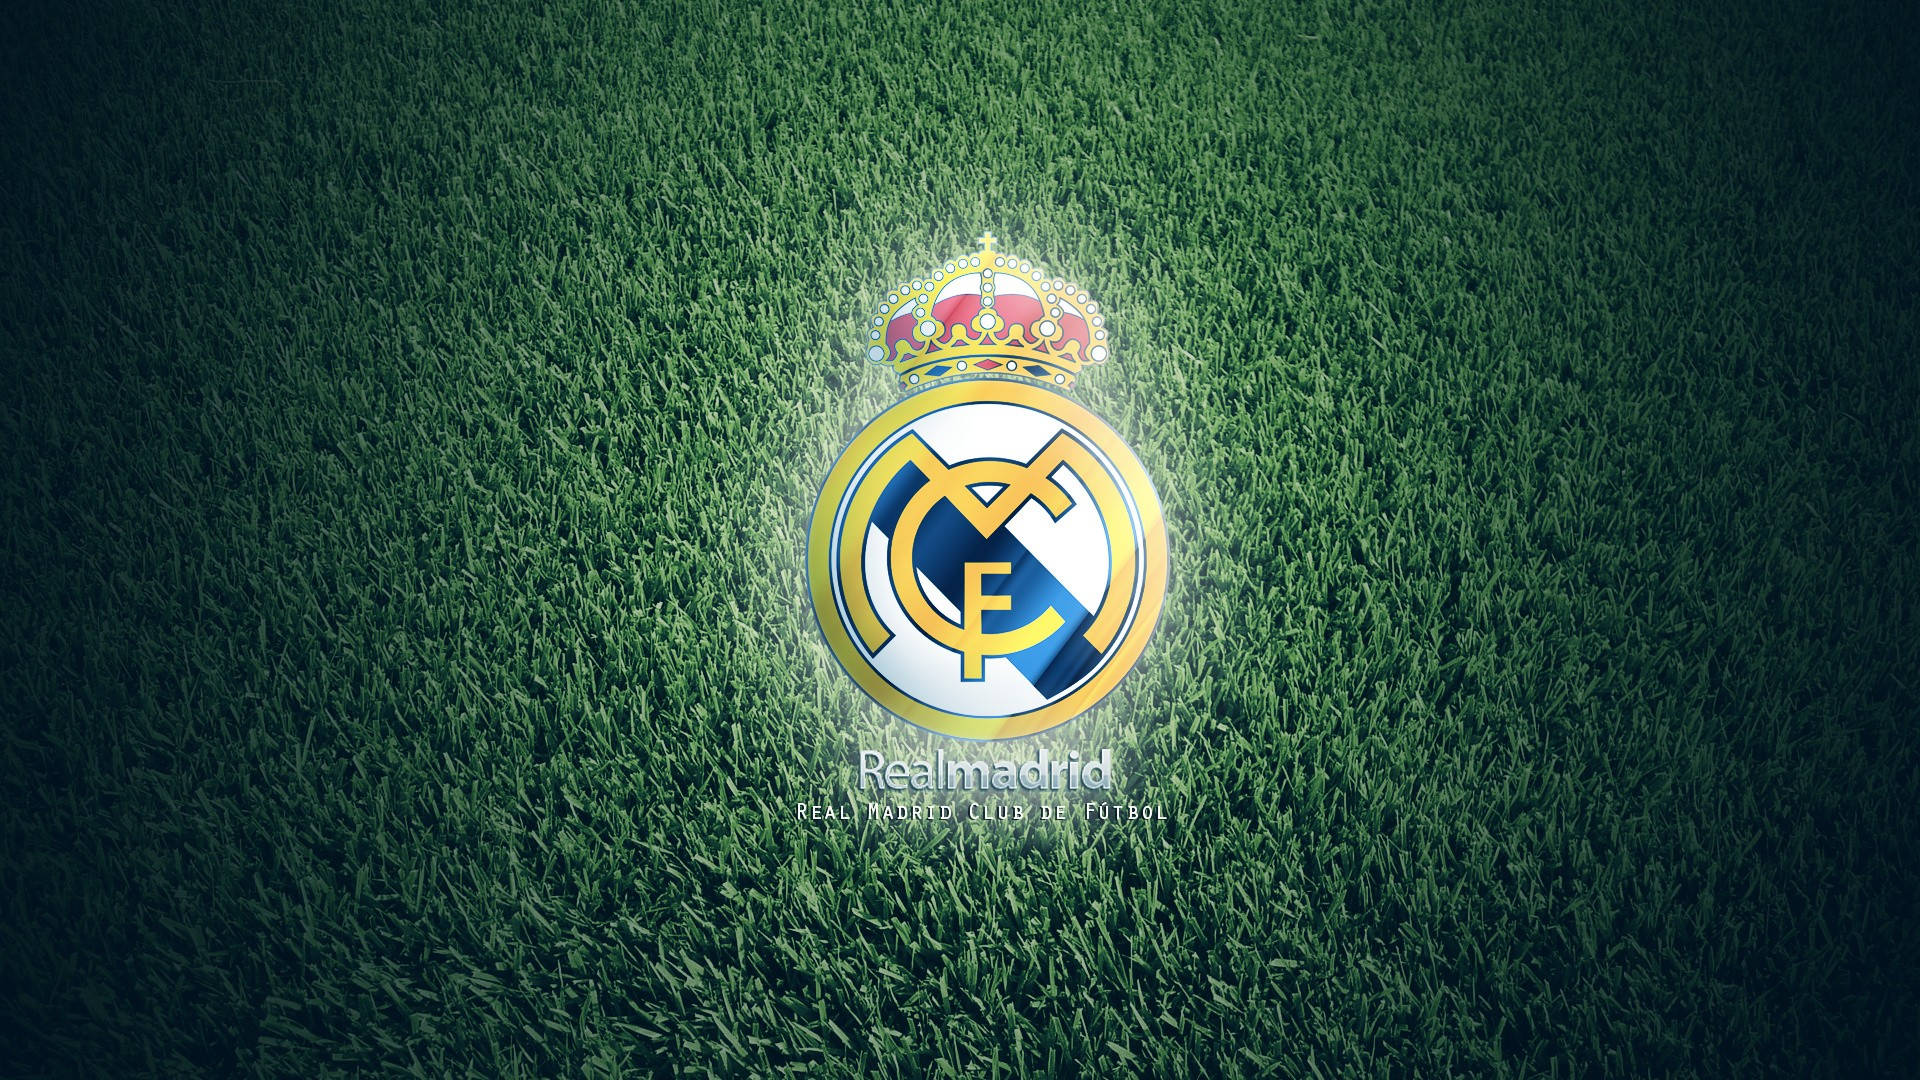 Real Madrid Cf Grassy Logo Background